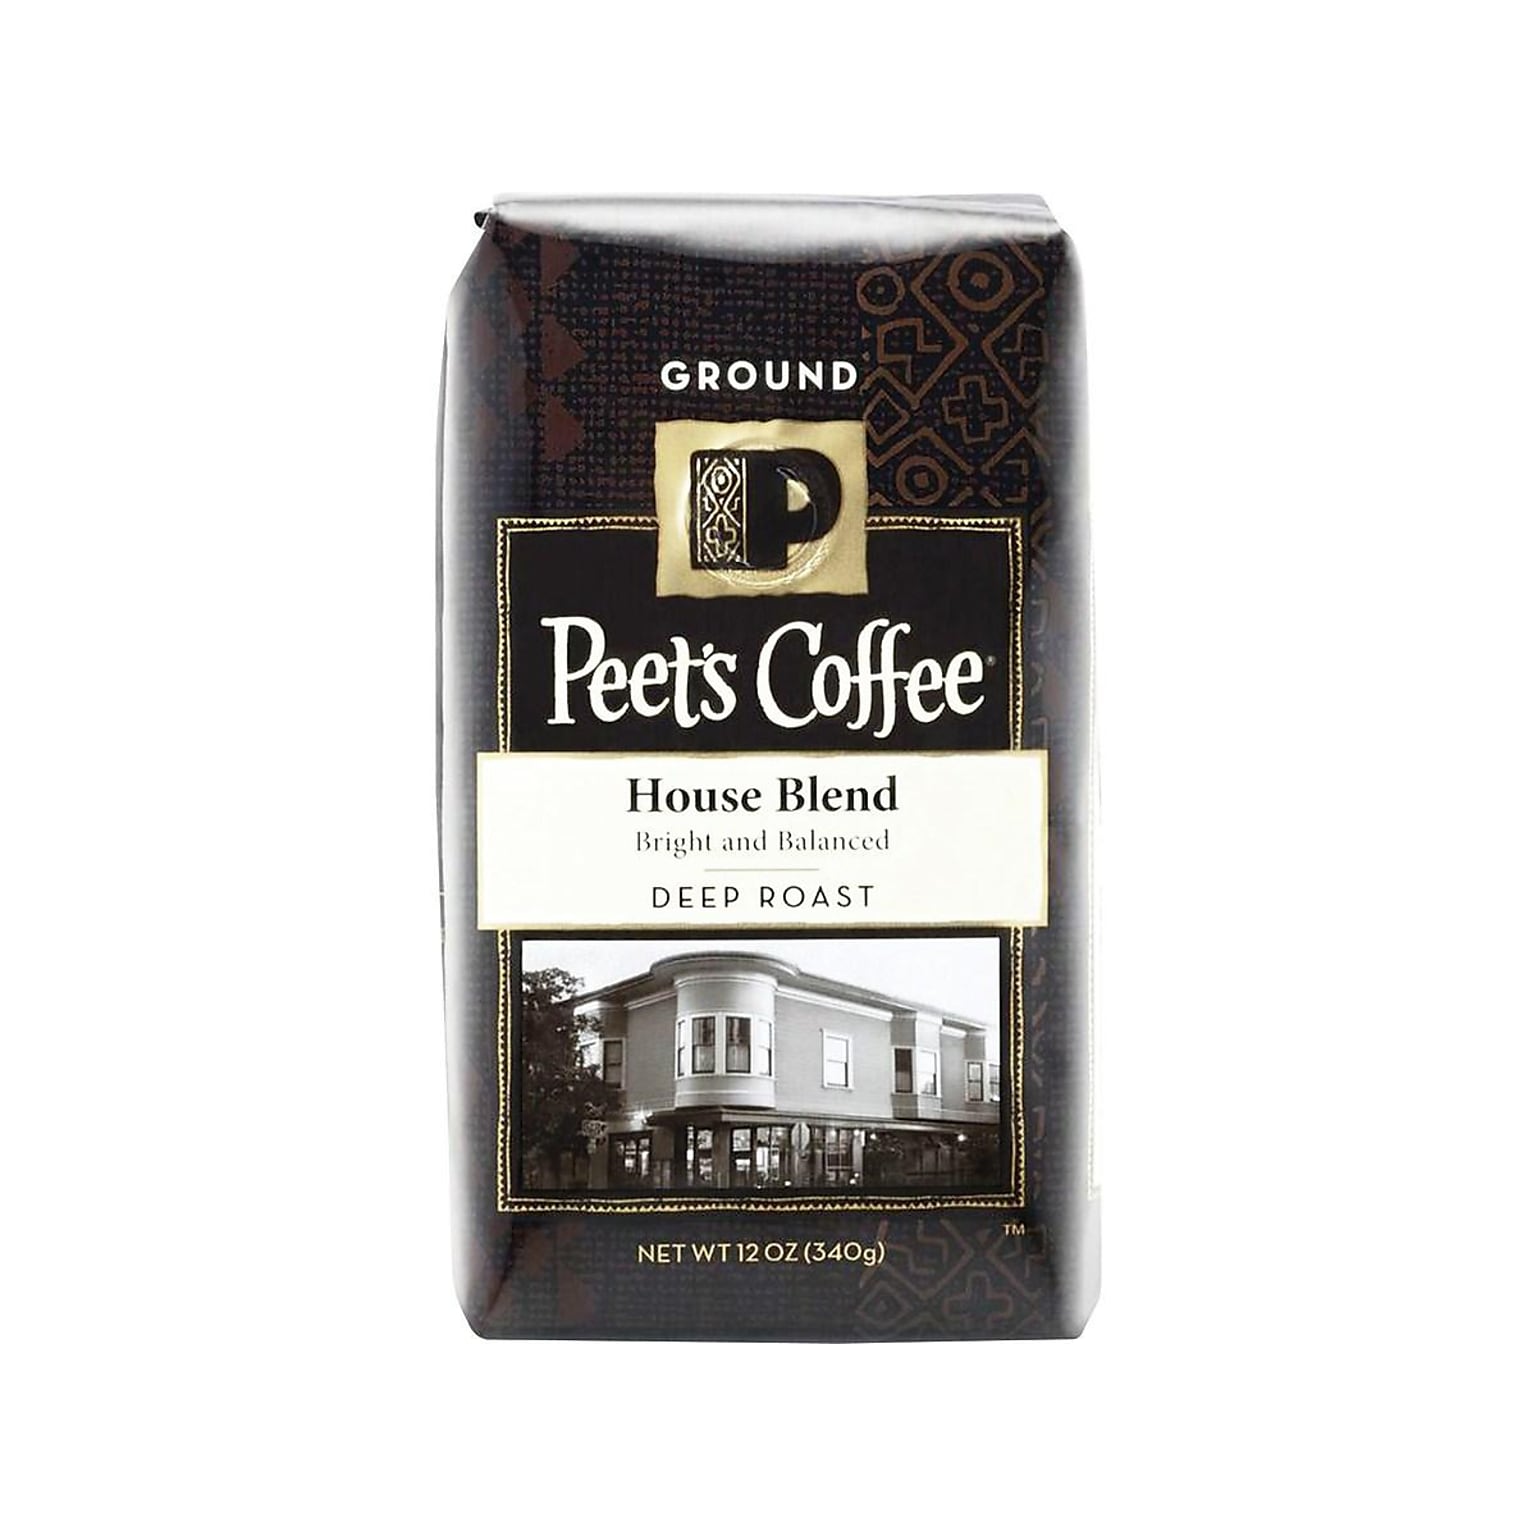 Peets Coffee House Blend Ground Coffee, Dark Roast, 10.5 oz. (PCE835261)